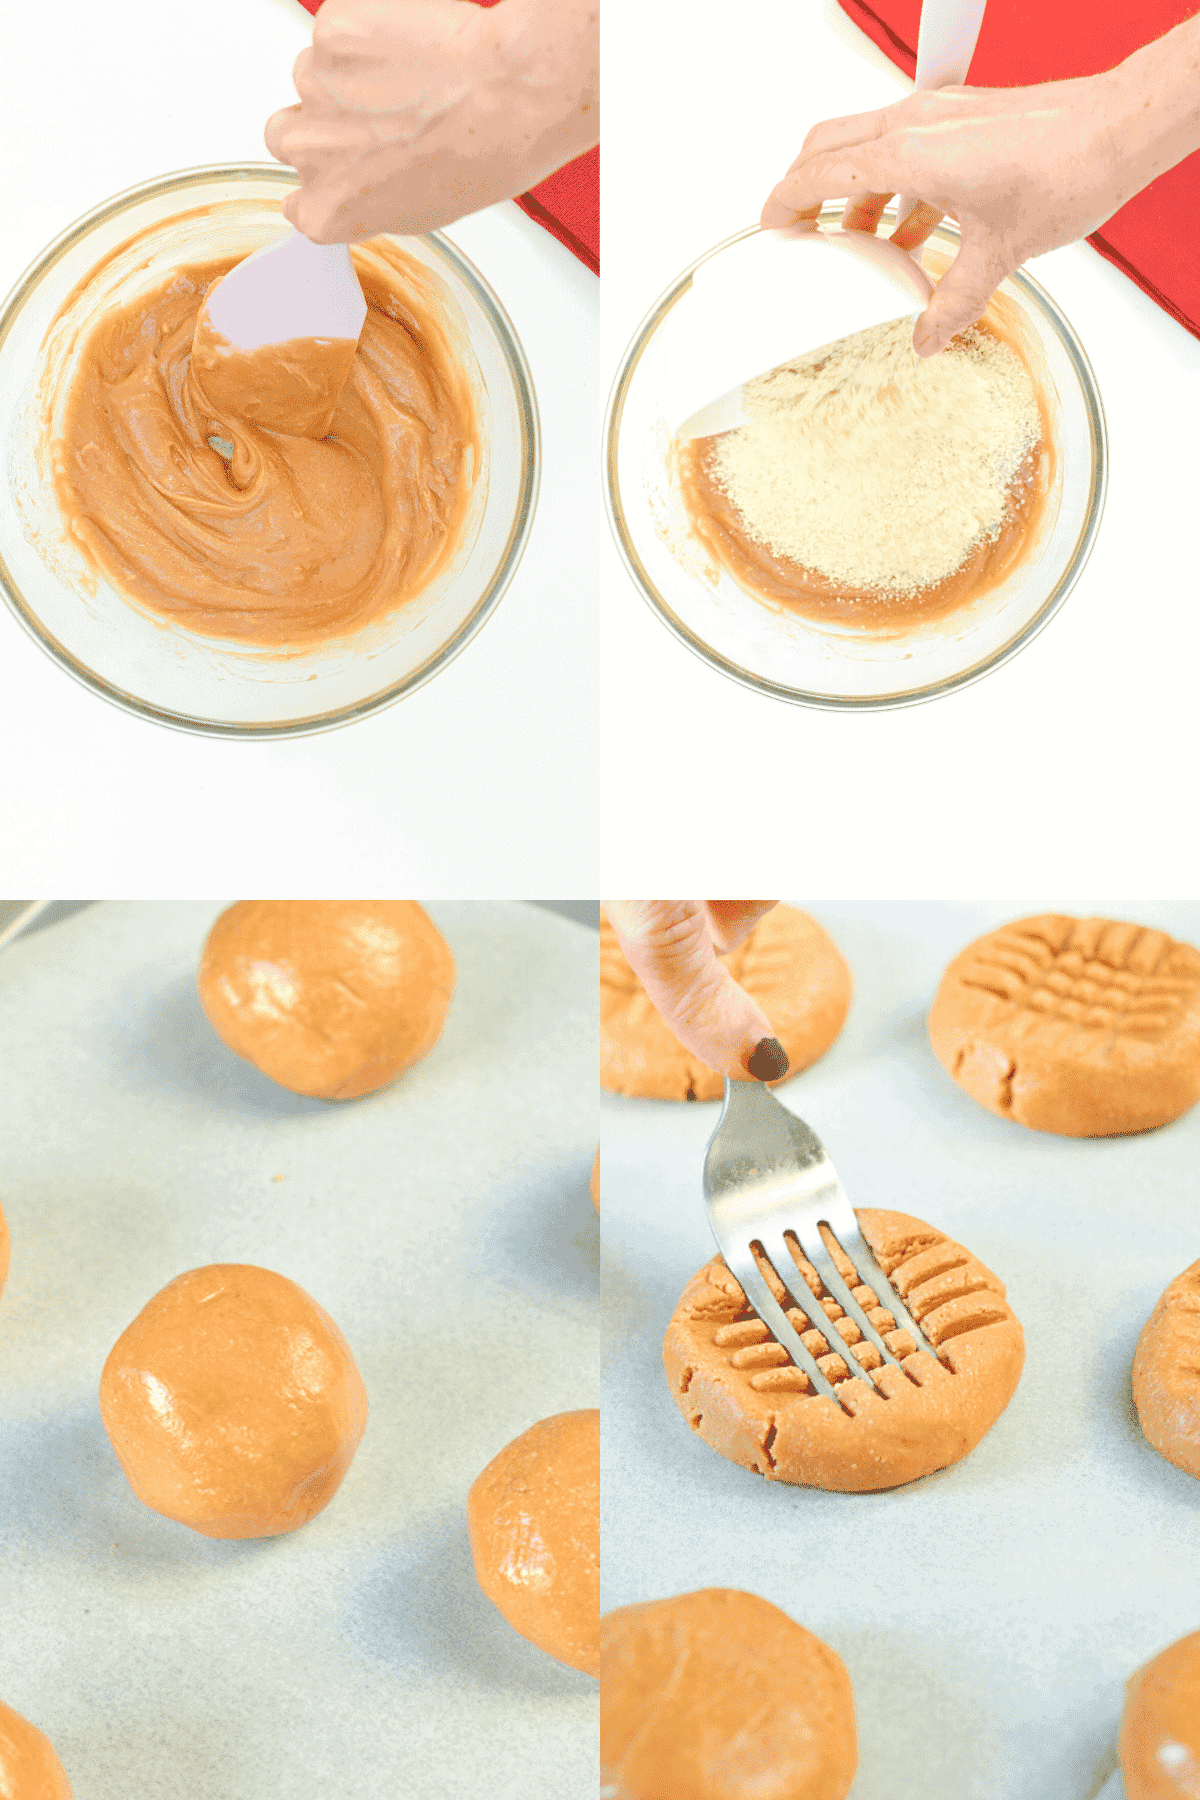 5-Ingredient Almond Flour Peanut Butter Cookies (No Eggs) - The ...